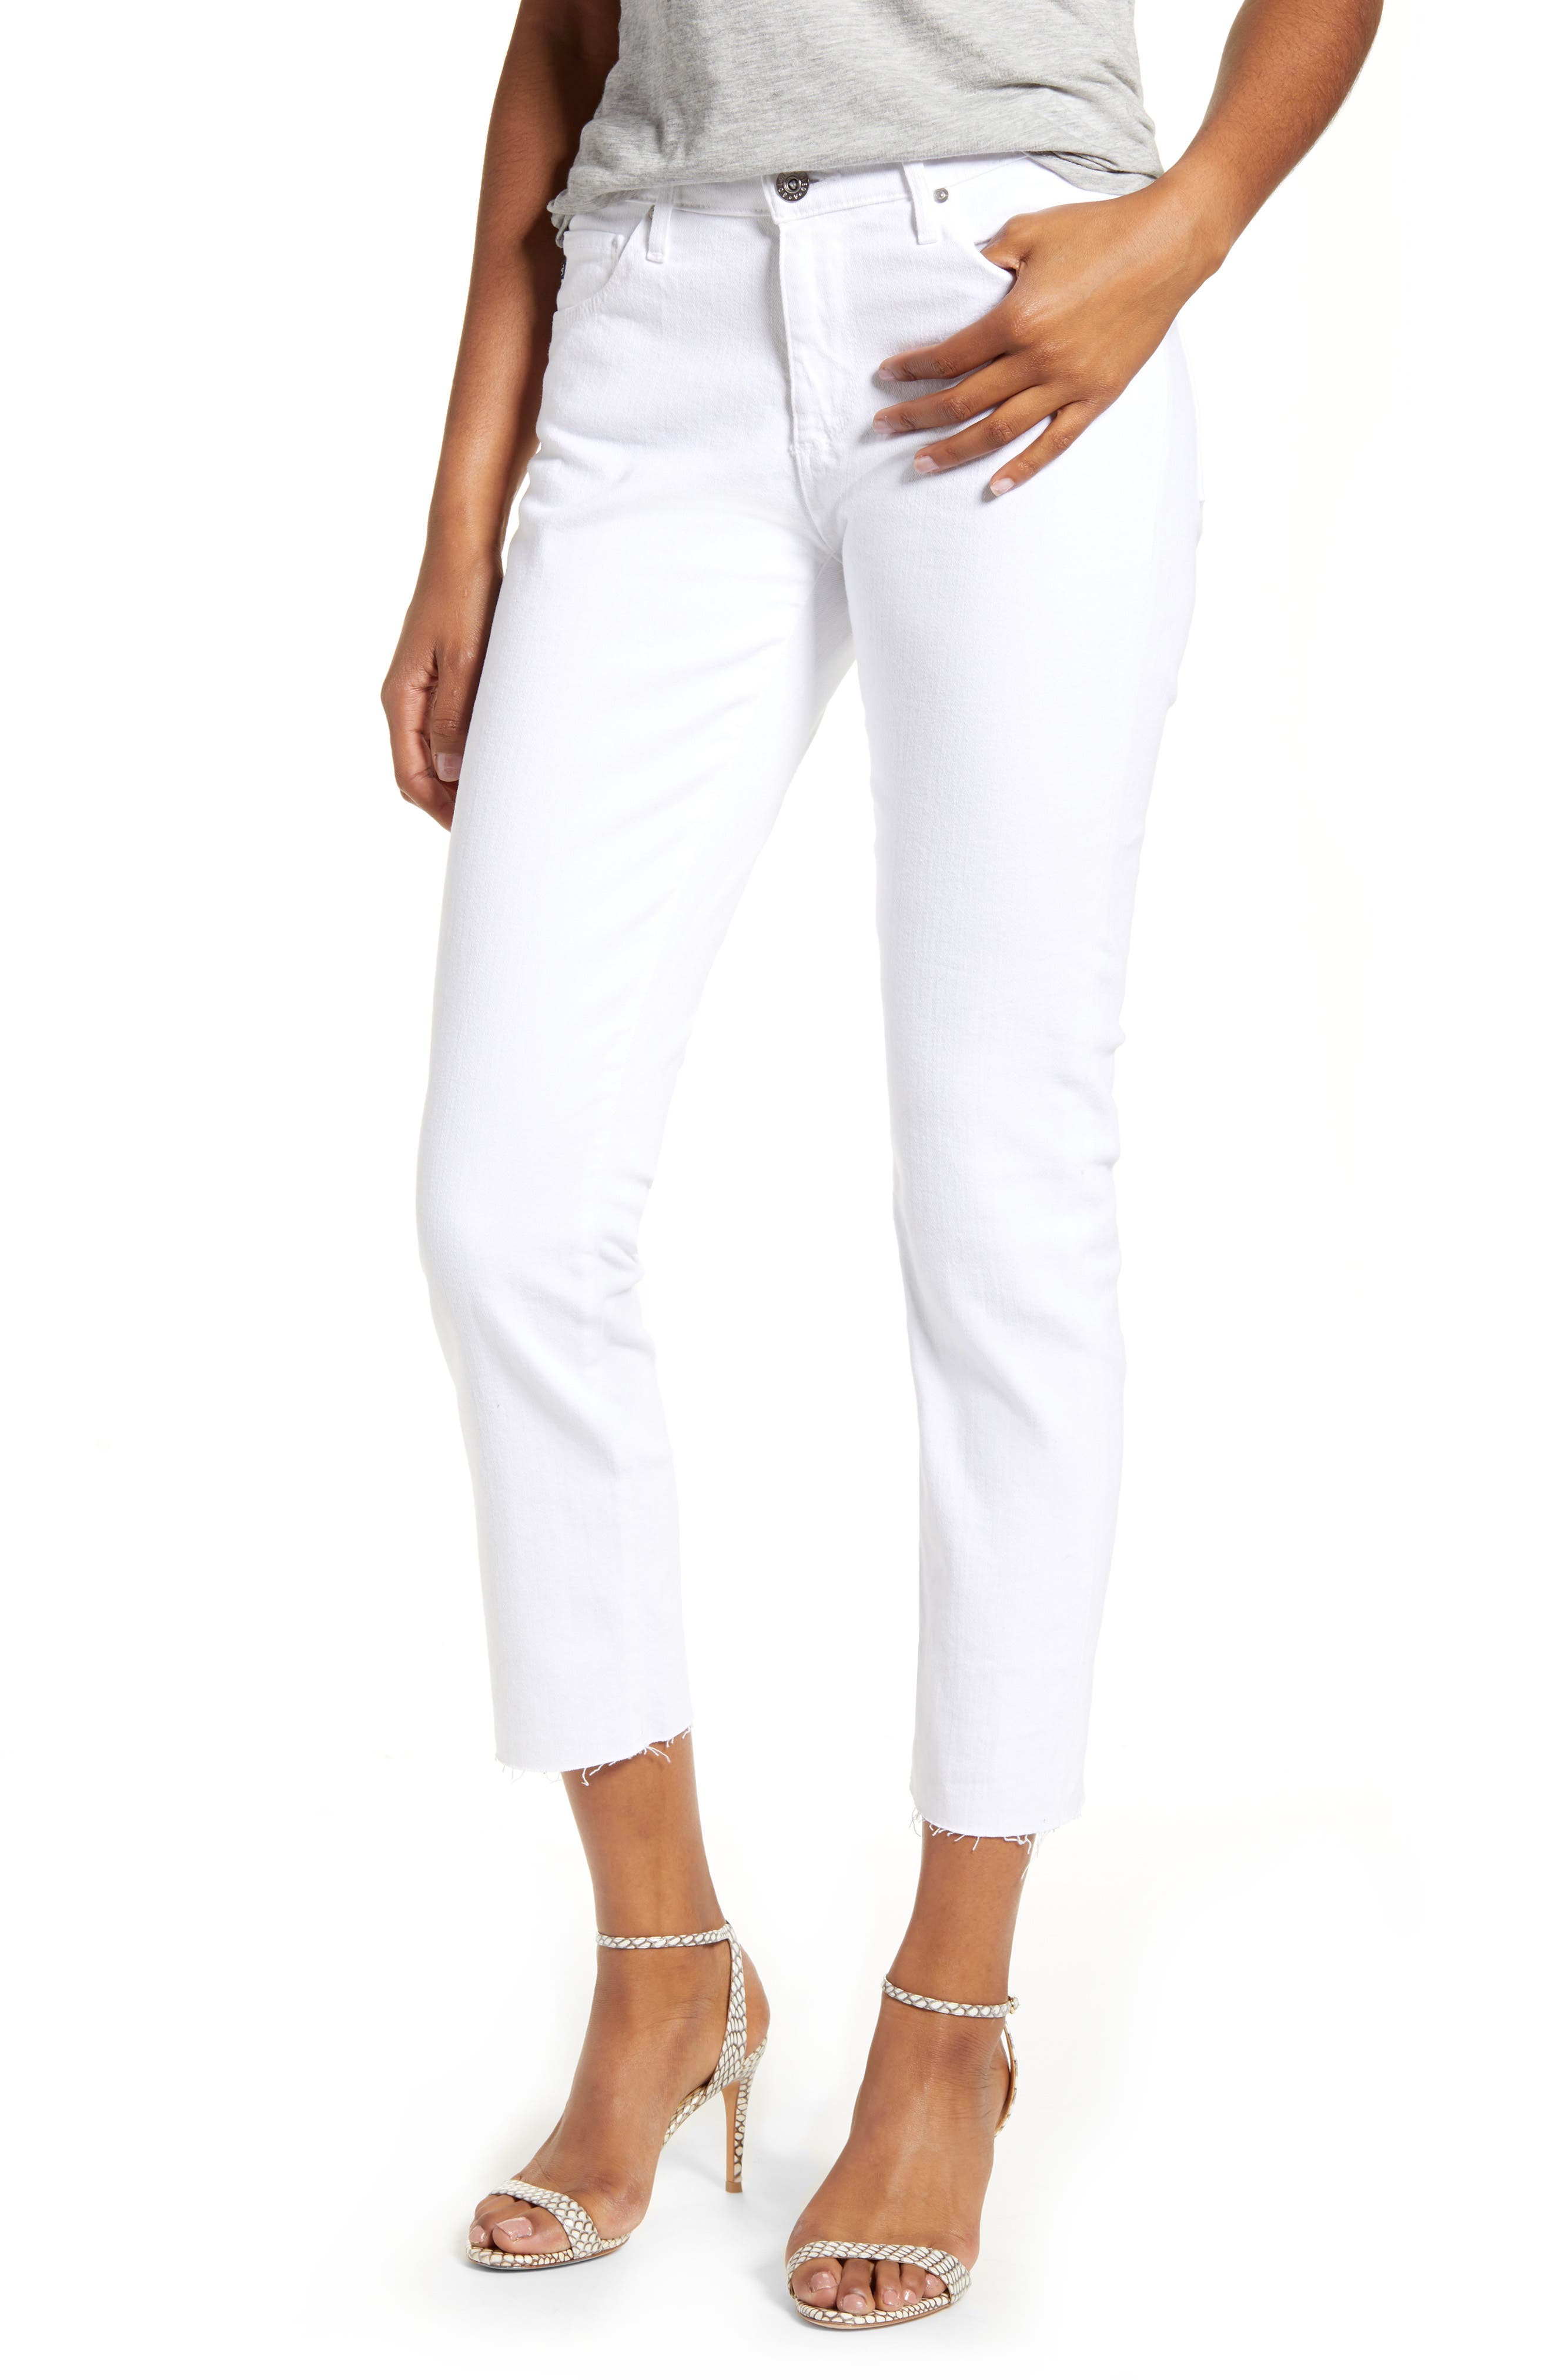 petite white crop jeans